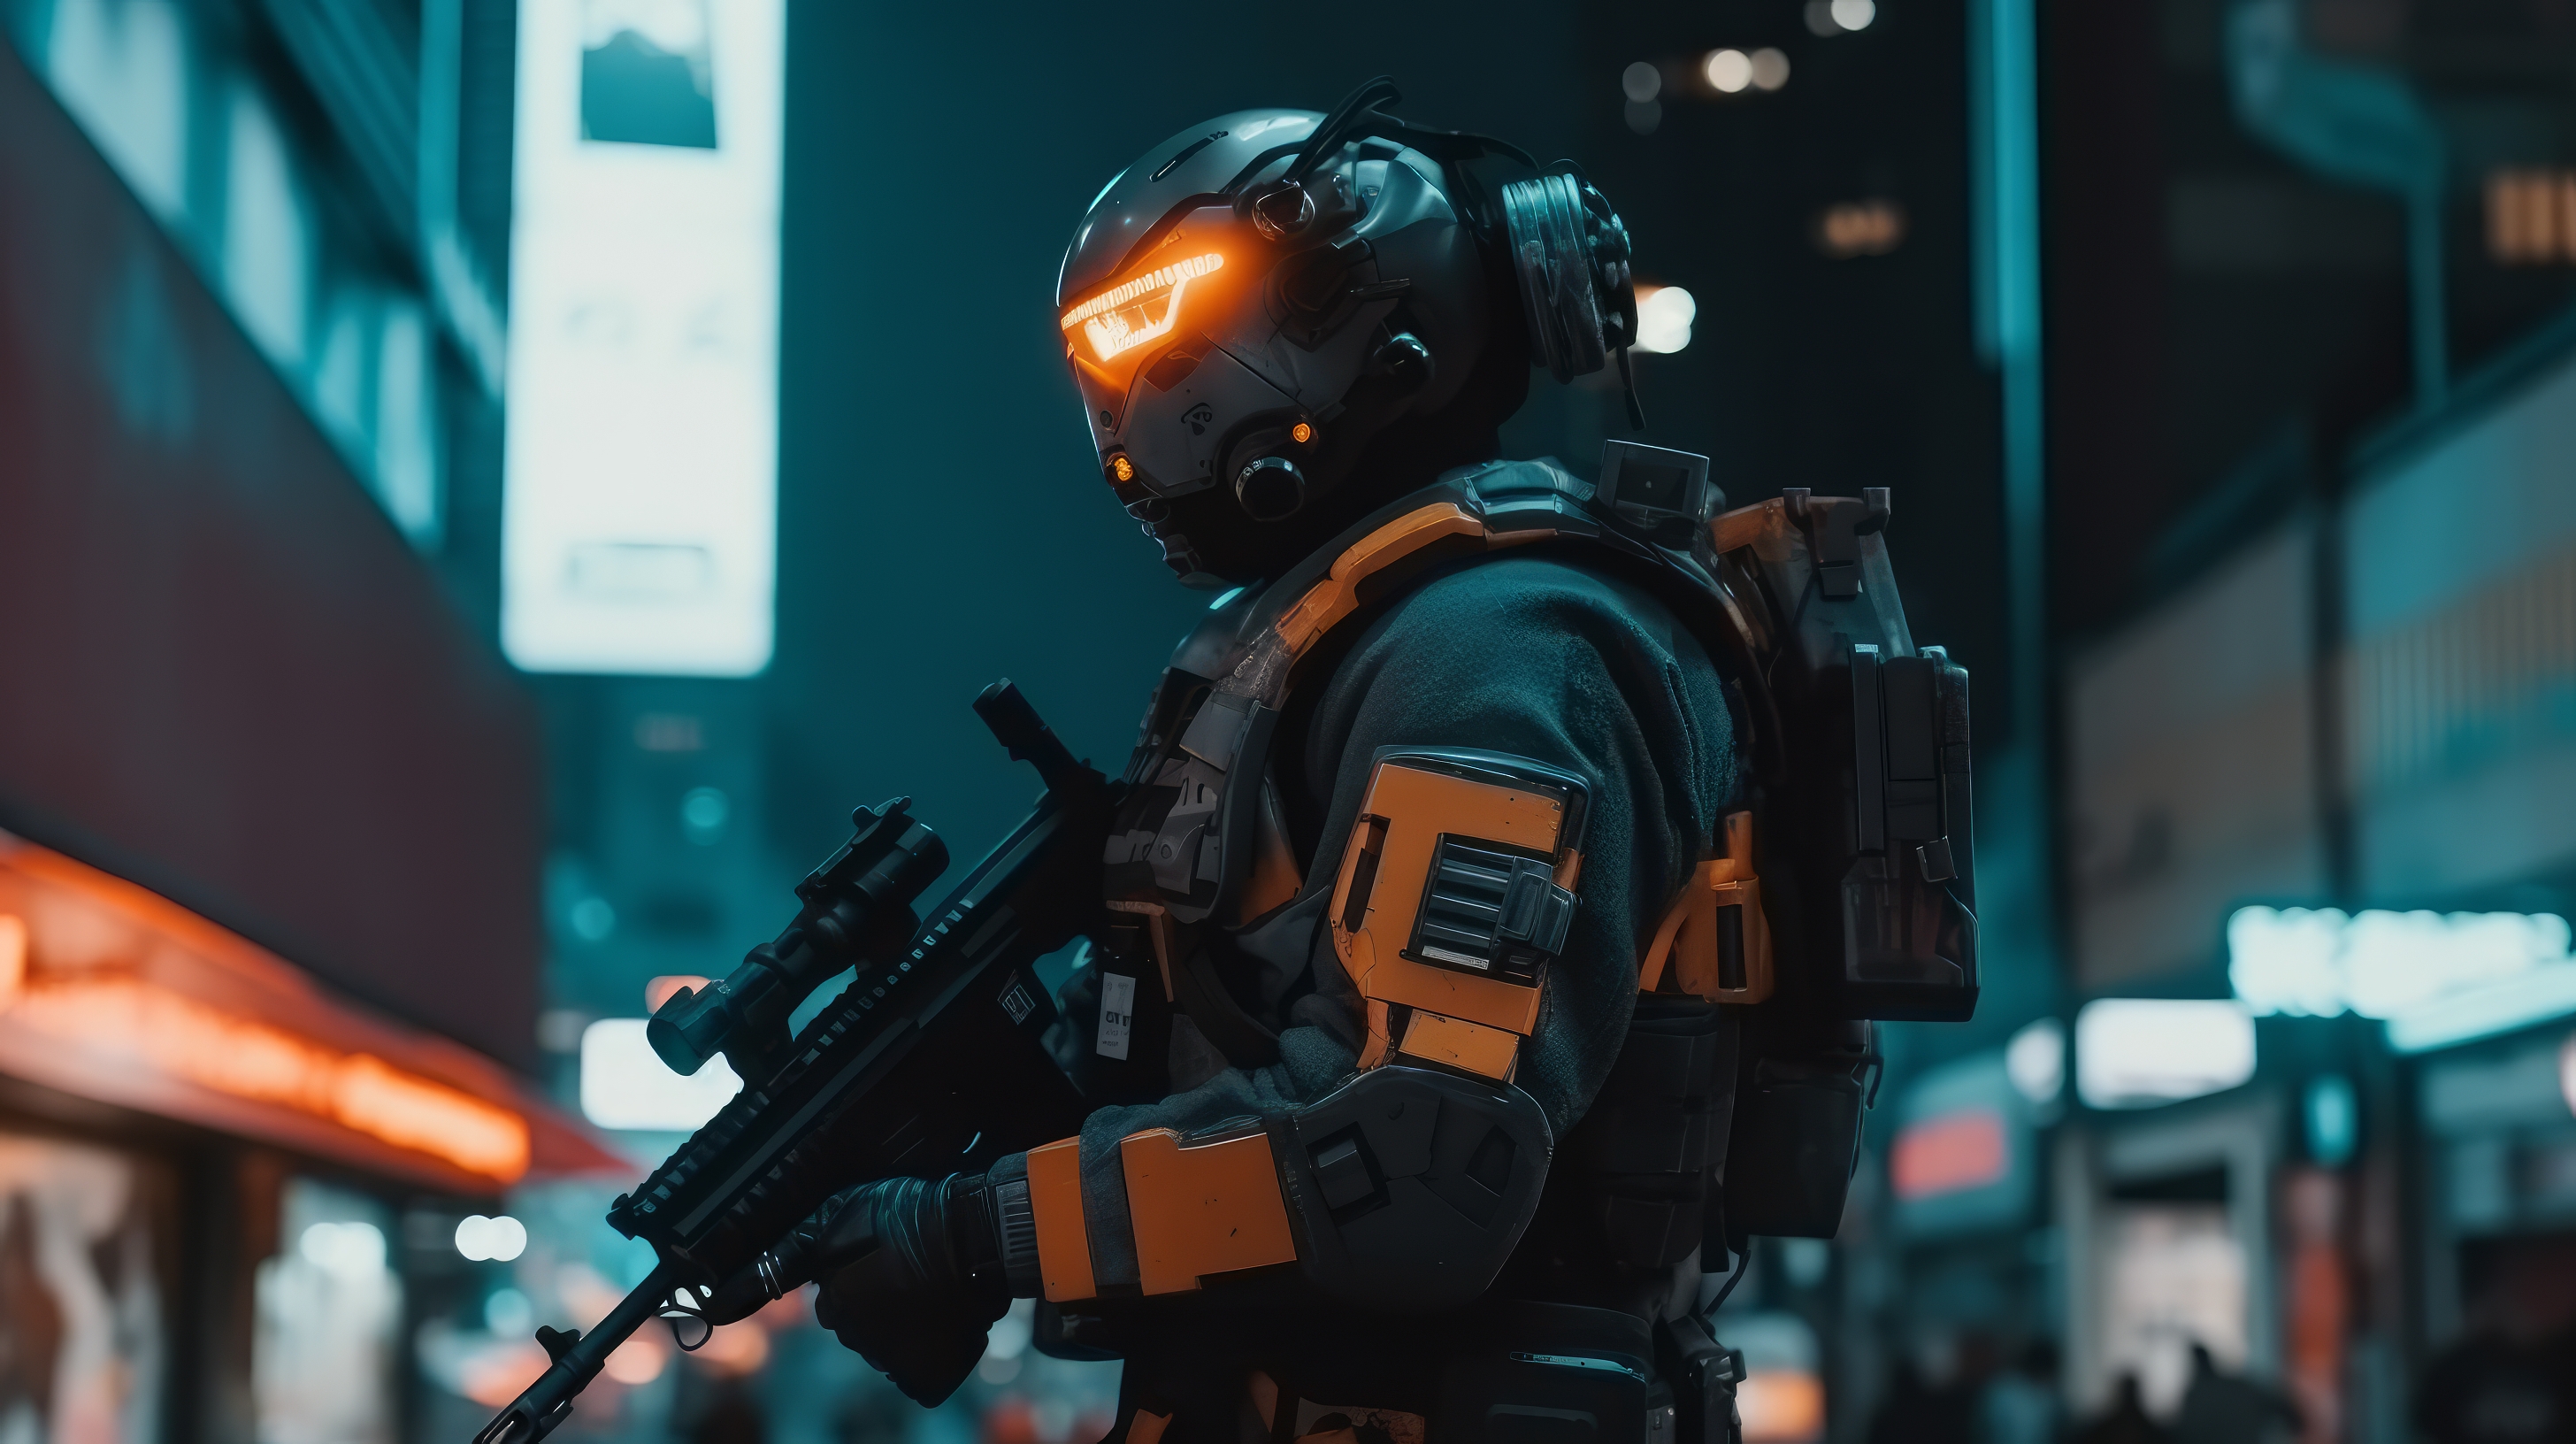 General 2912x1632 AI art soldier cyberpunk weapon science fiction city plants Asia gun blurry background